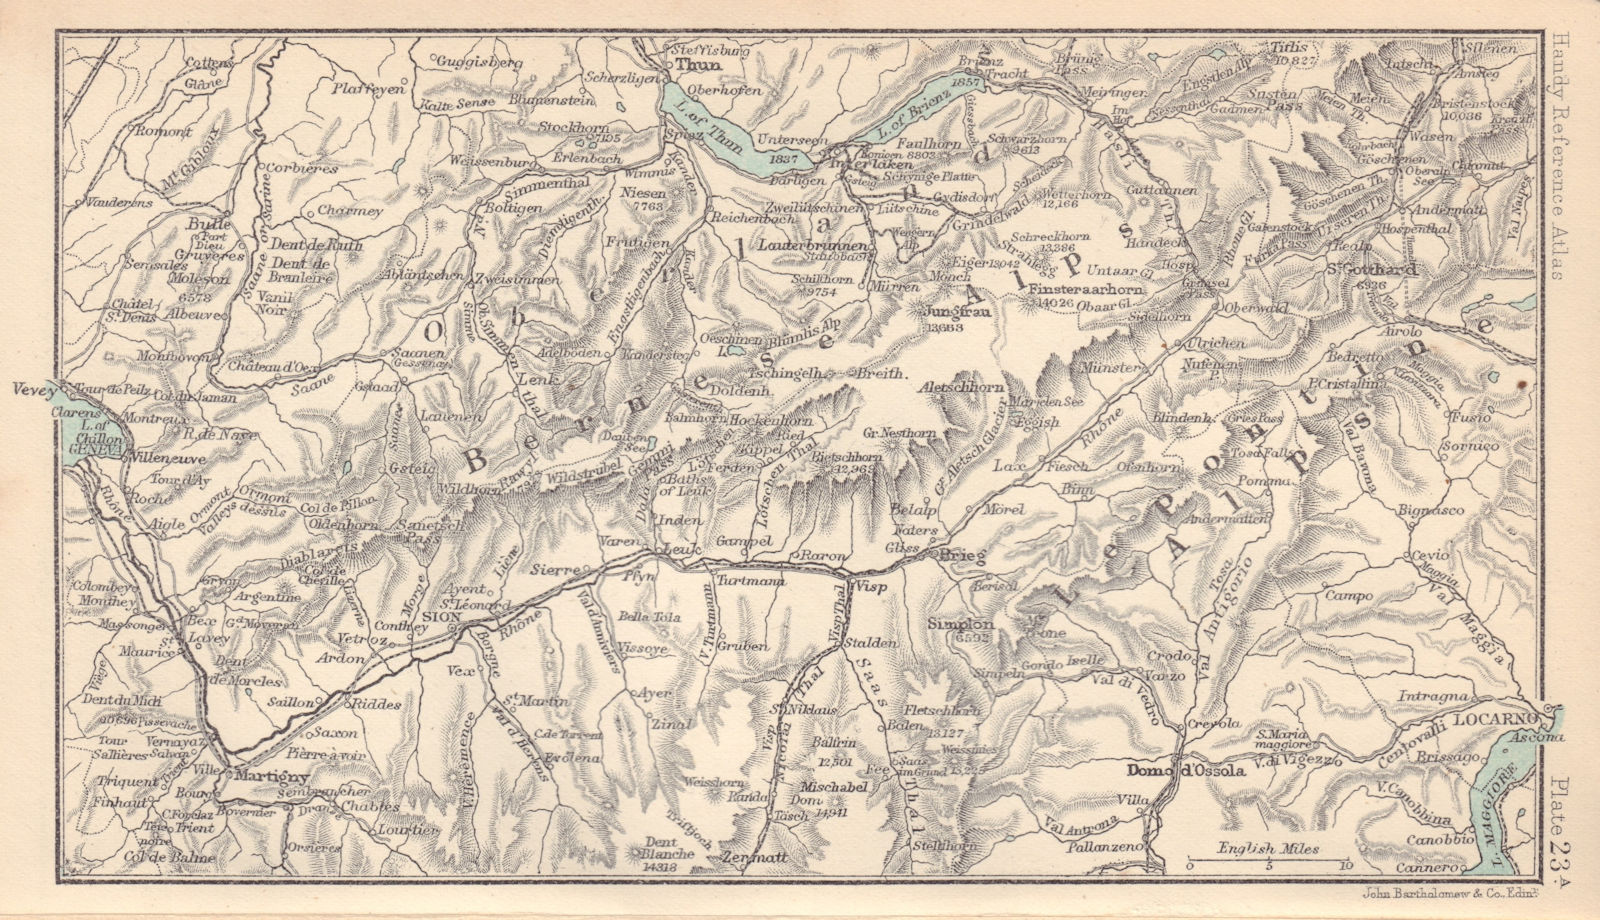 Bernese Alps. Lepontine Alps. Sion Thun Locarno. Switzerland 1898 old map